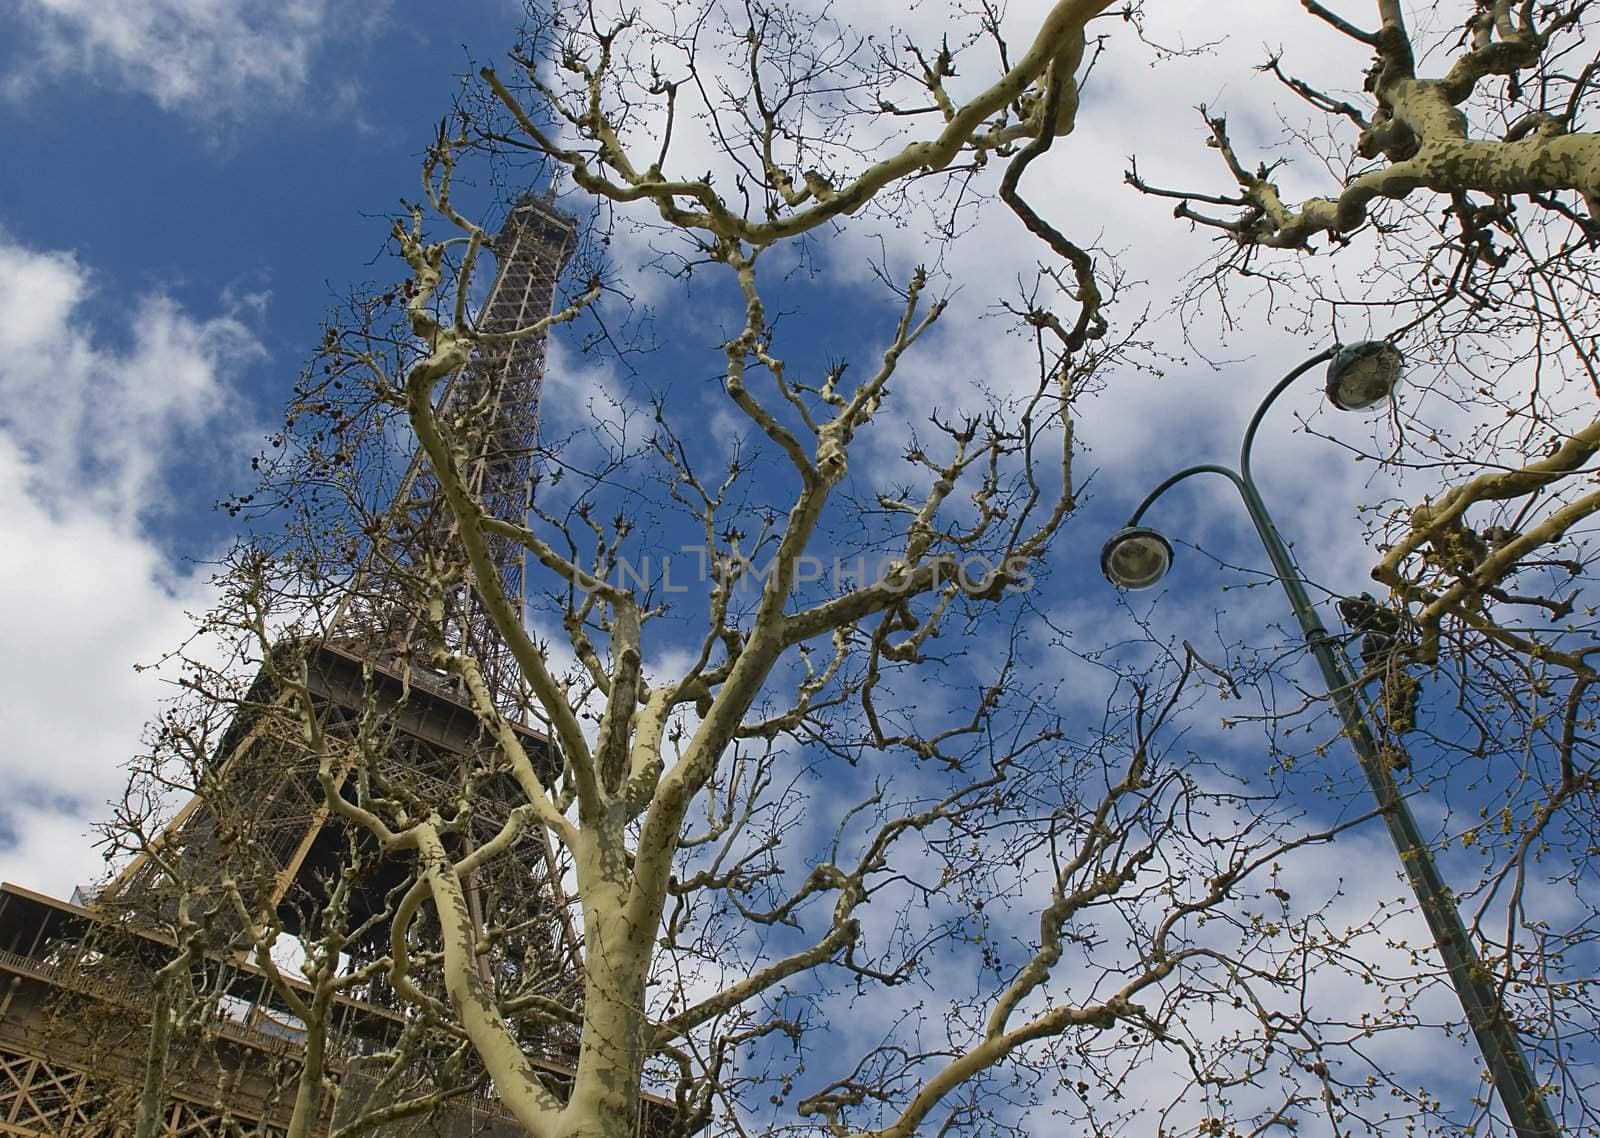 Eiffel tower by photohaydar